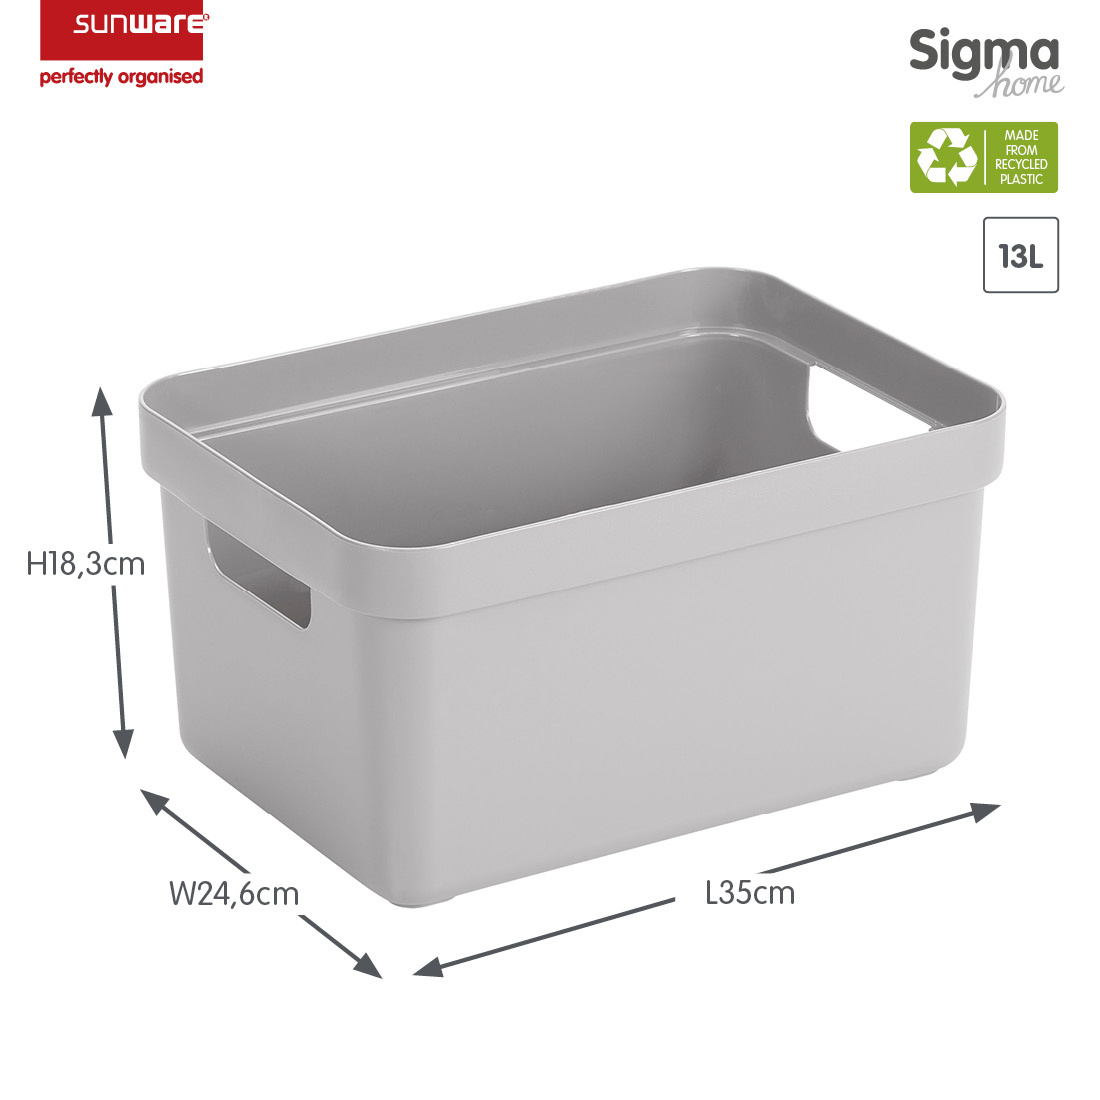 Sigma home storage box 13L grey